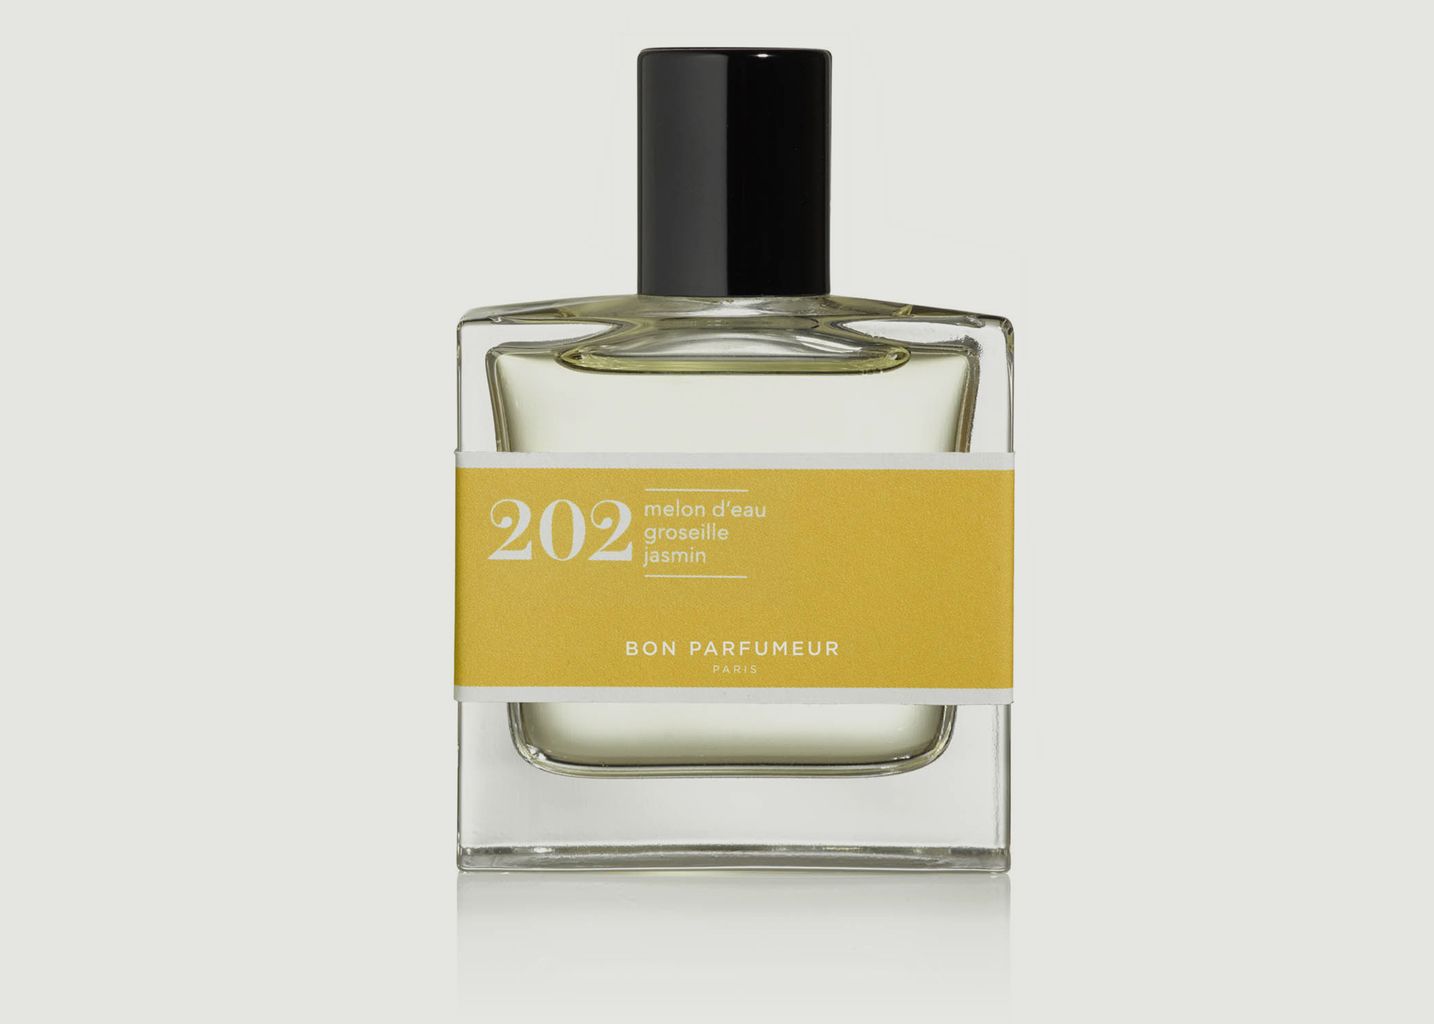 202 Watermelon, Redcurrant - Bon Parfumeur